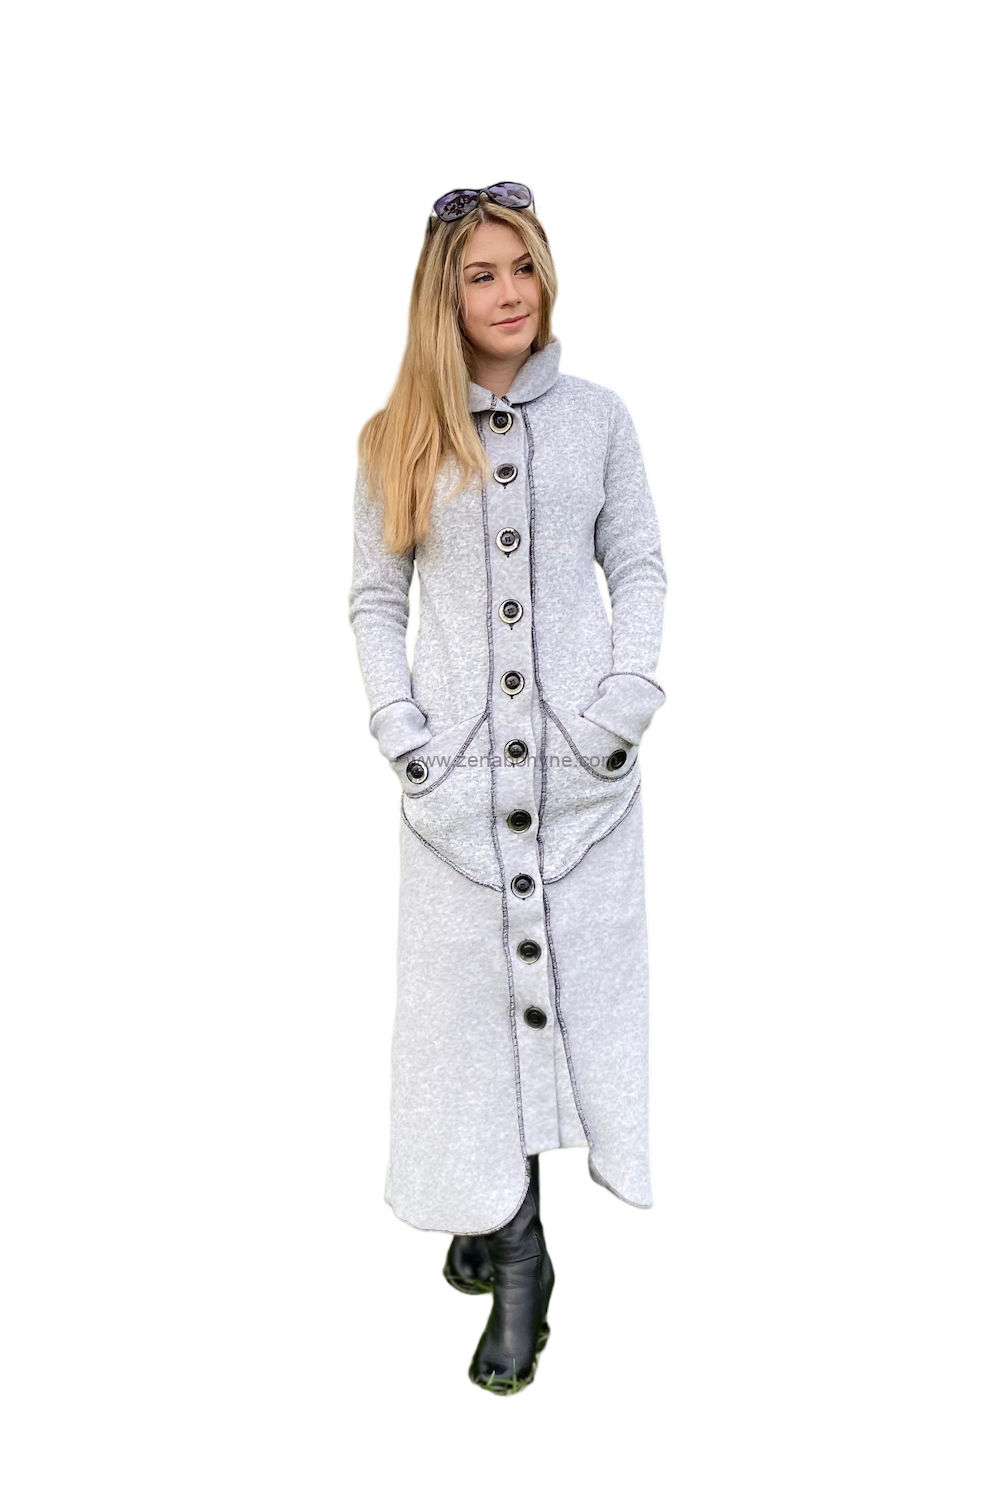 JASNA - dlouhý svetrový kabátek